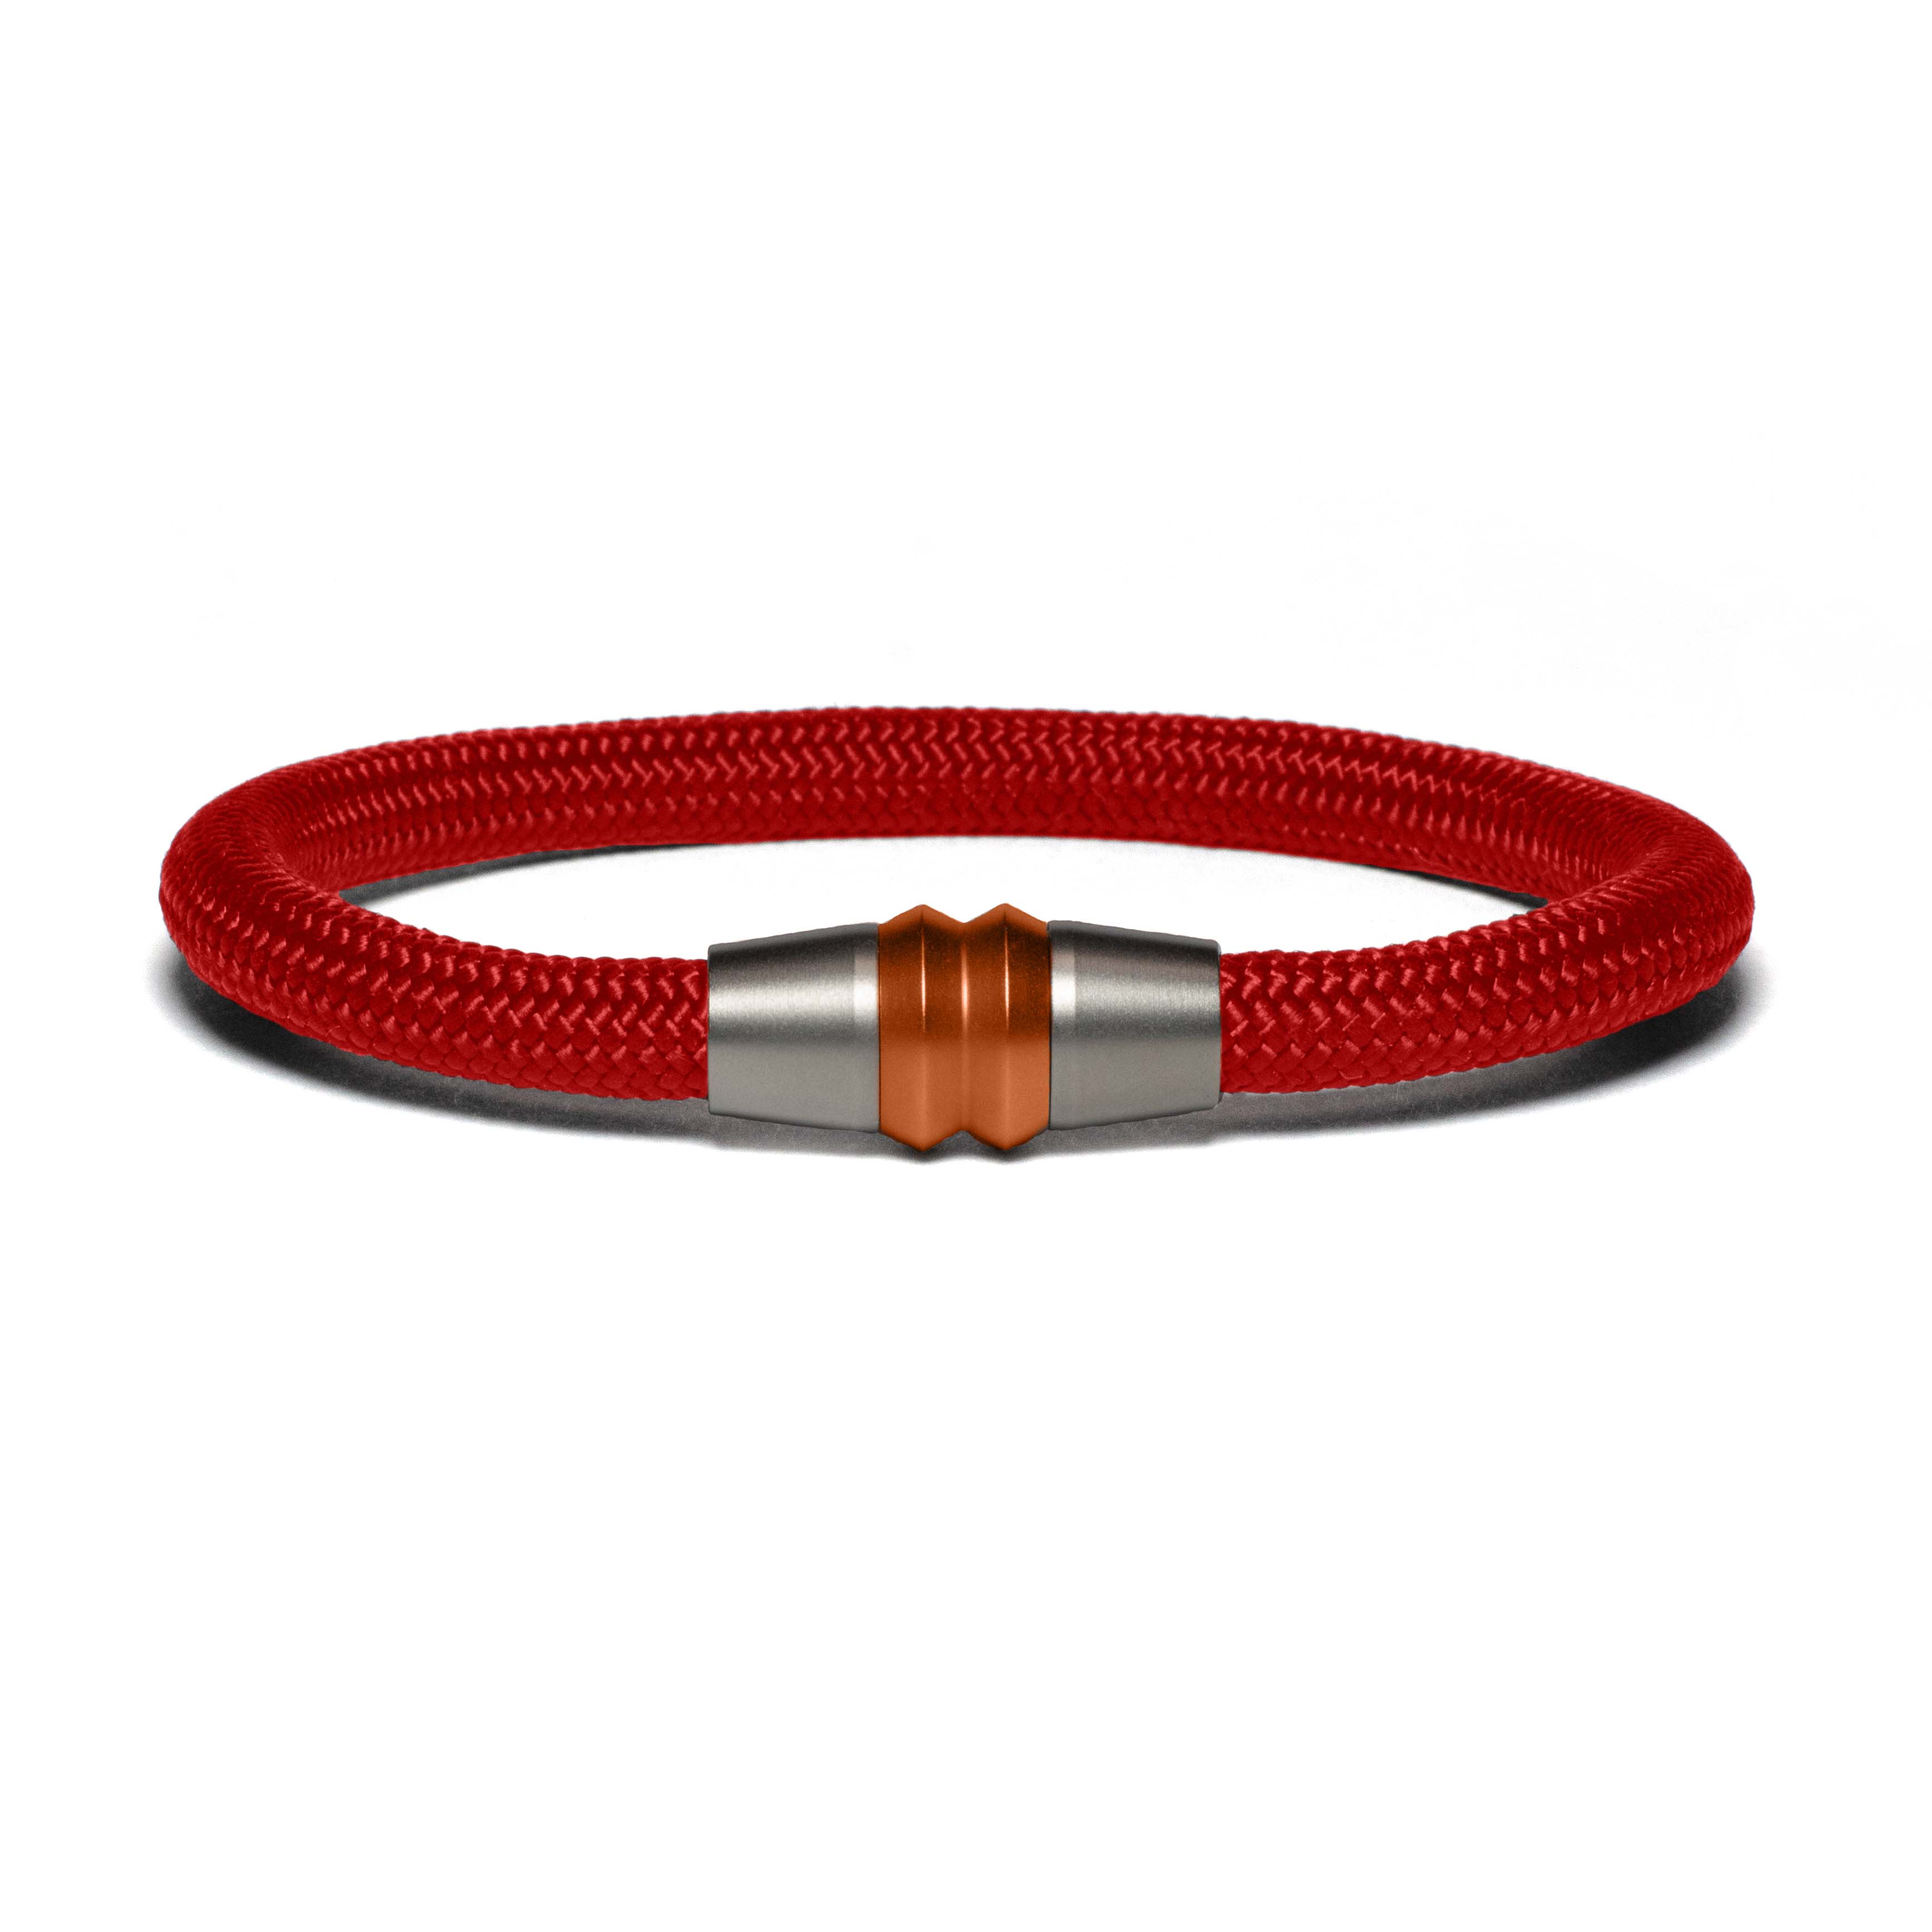 Bracelet bi-color copper - Paracord red